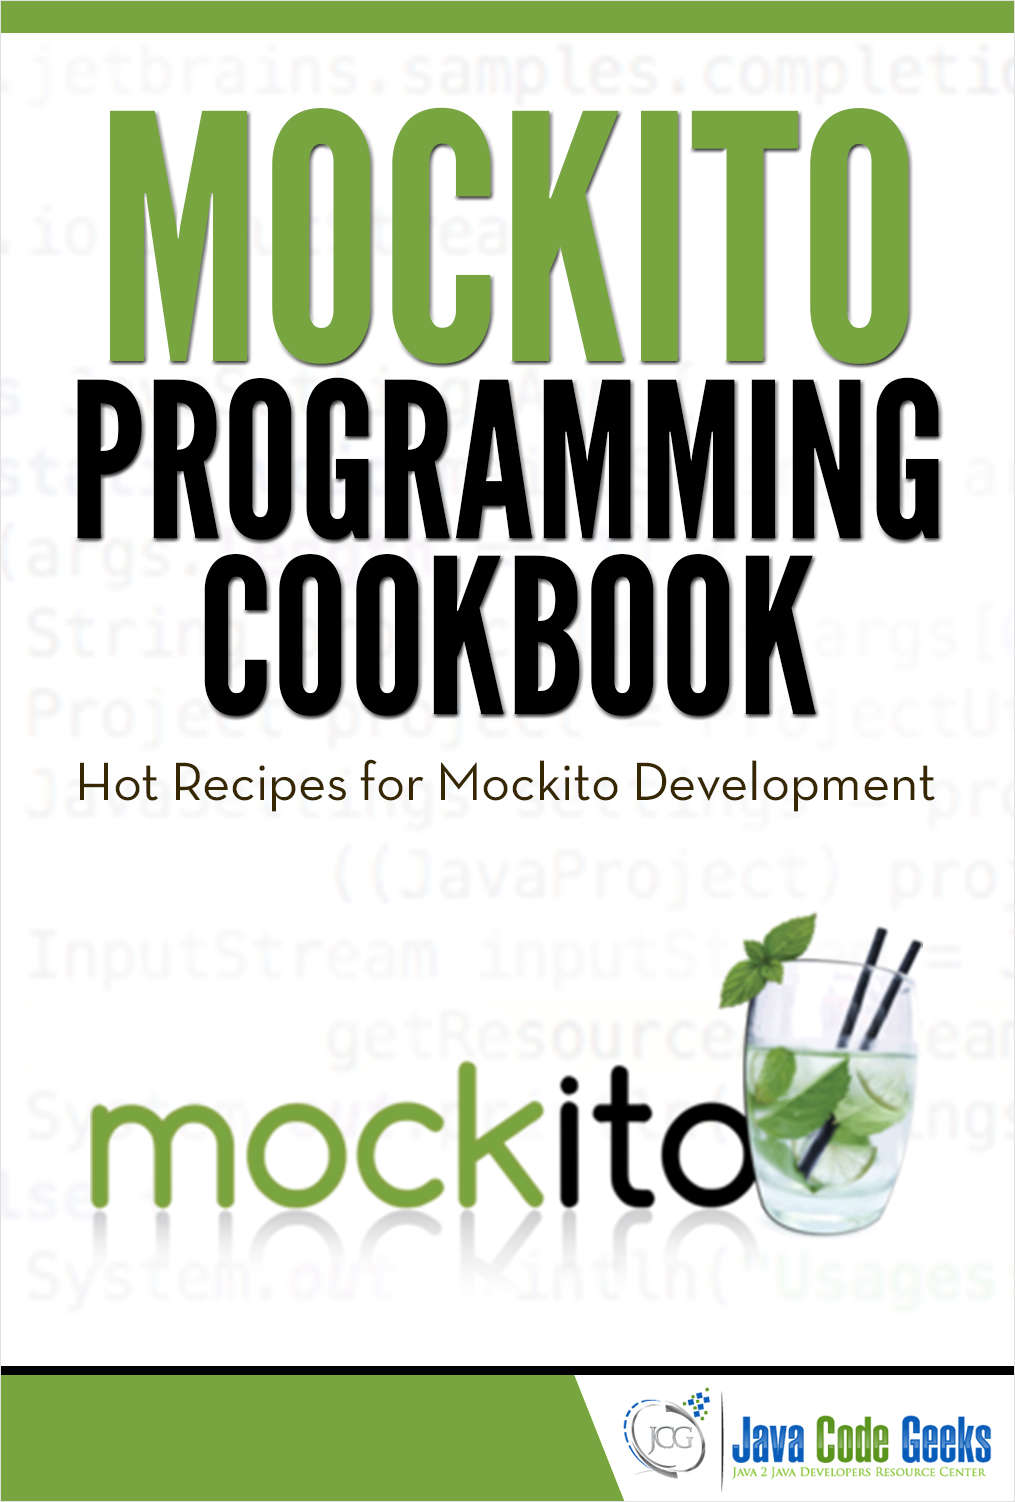 Mockito Programming Cookbook